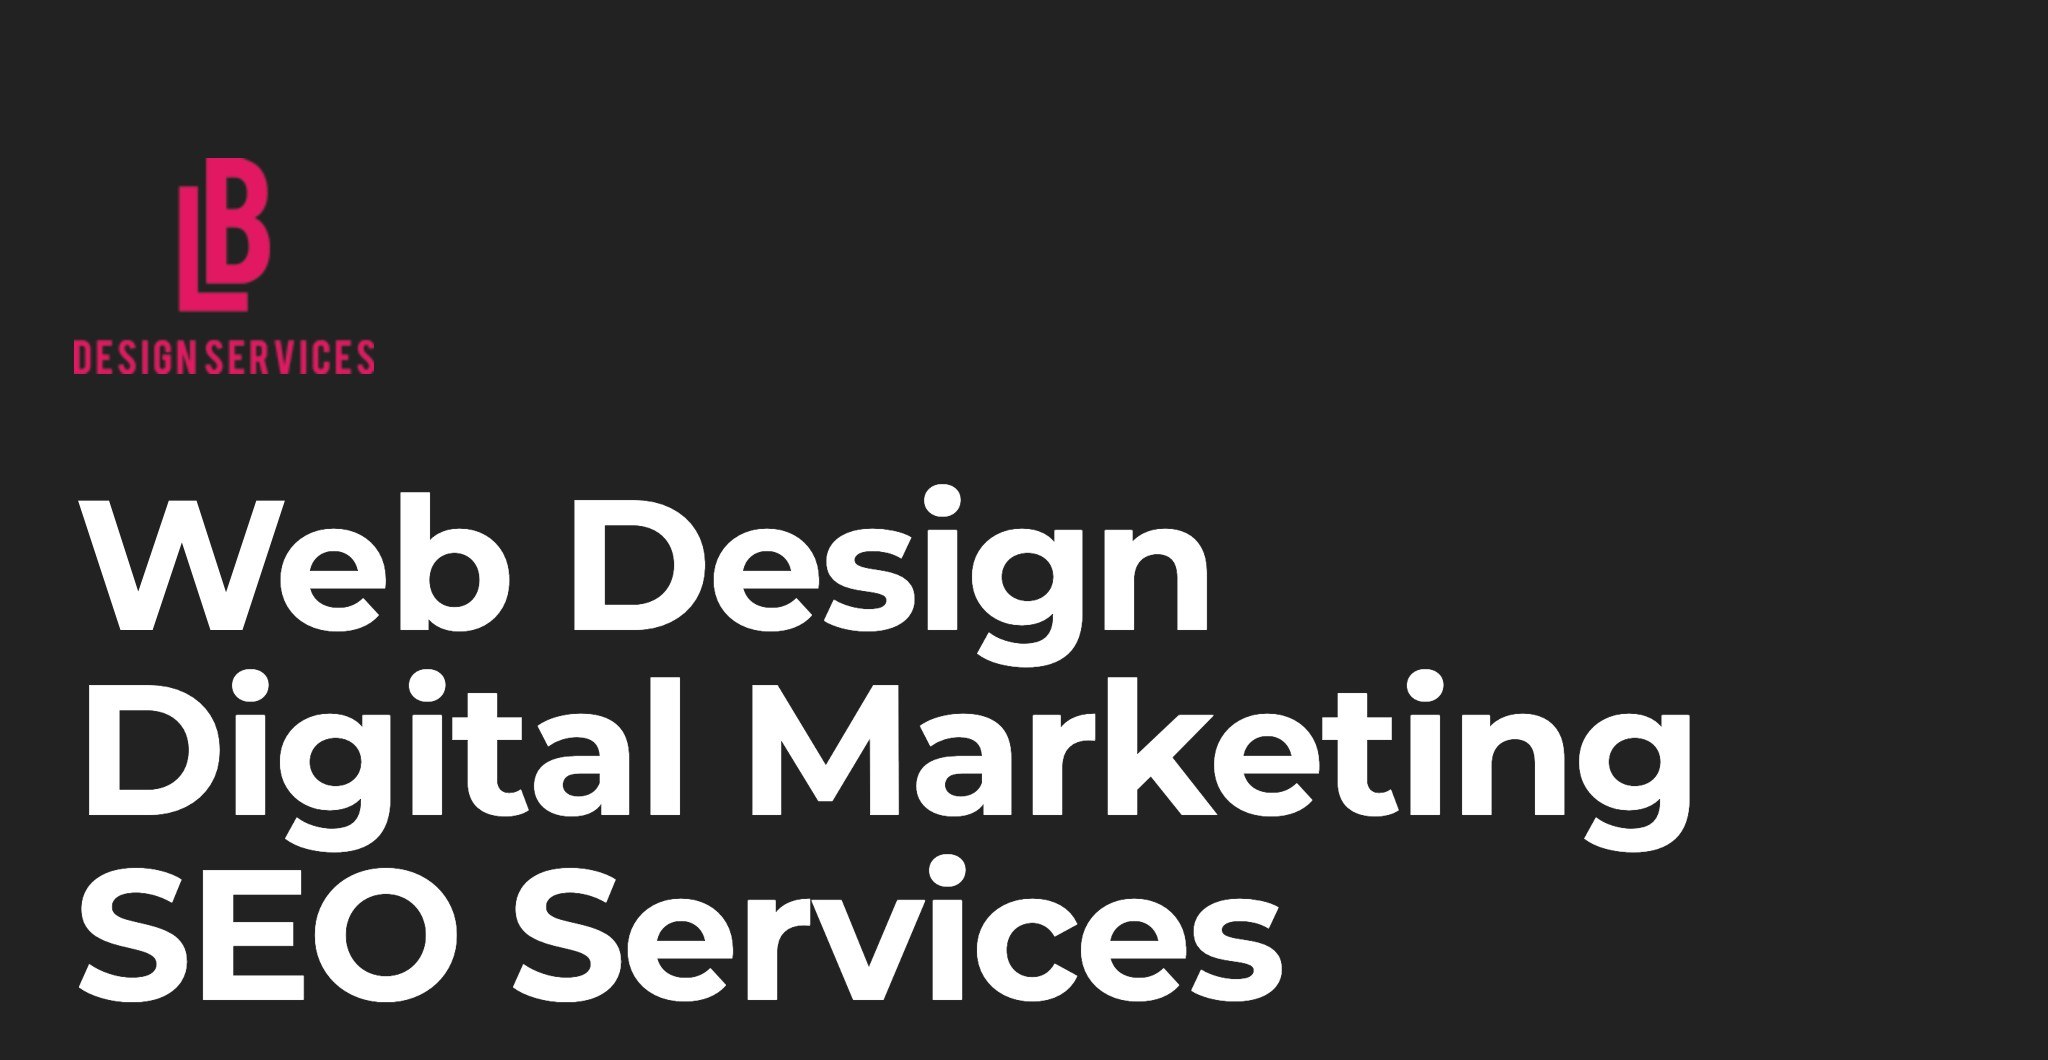 LB Design Services, Inc